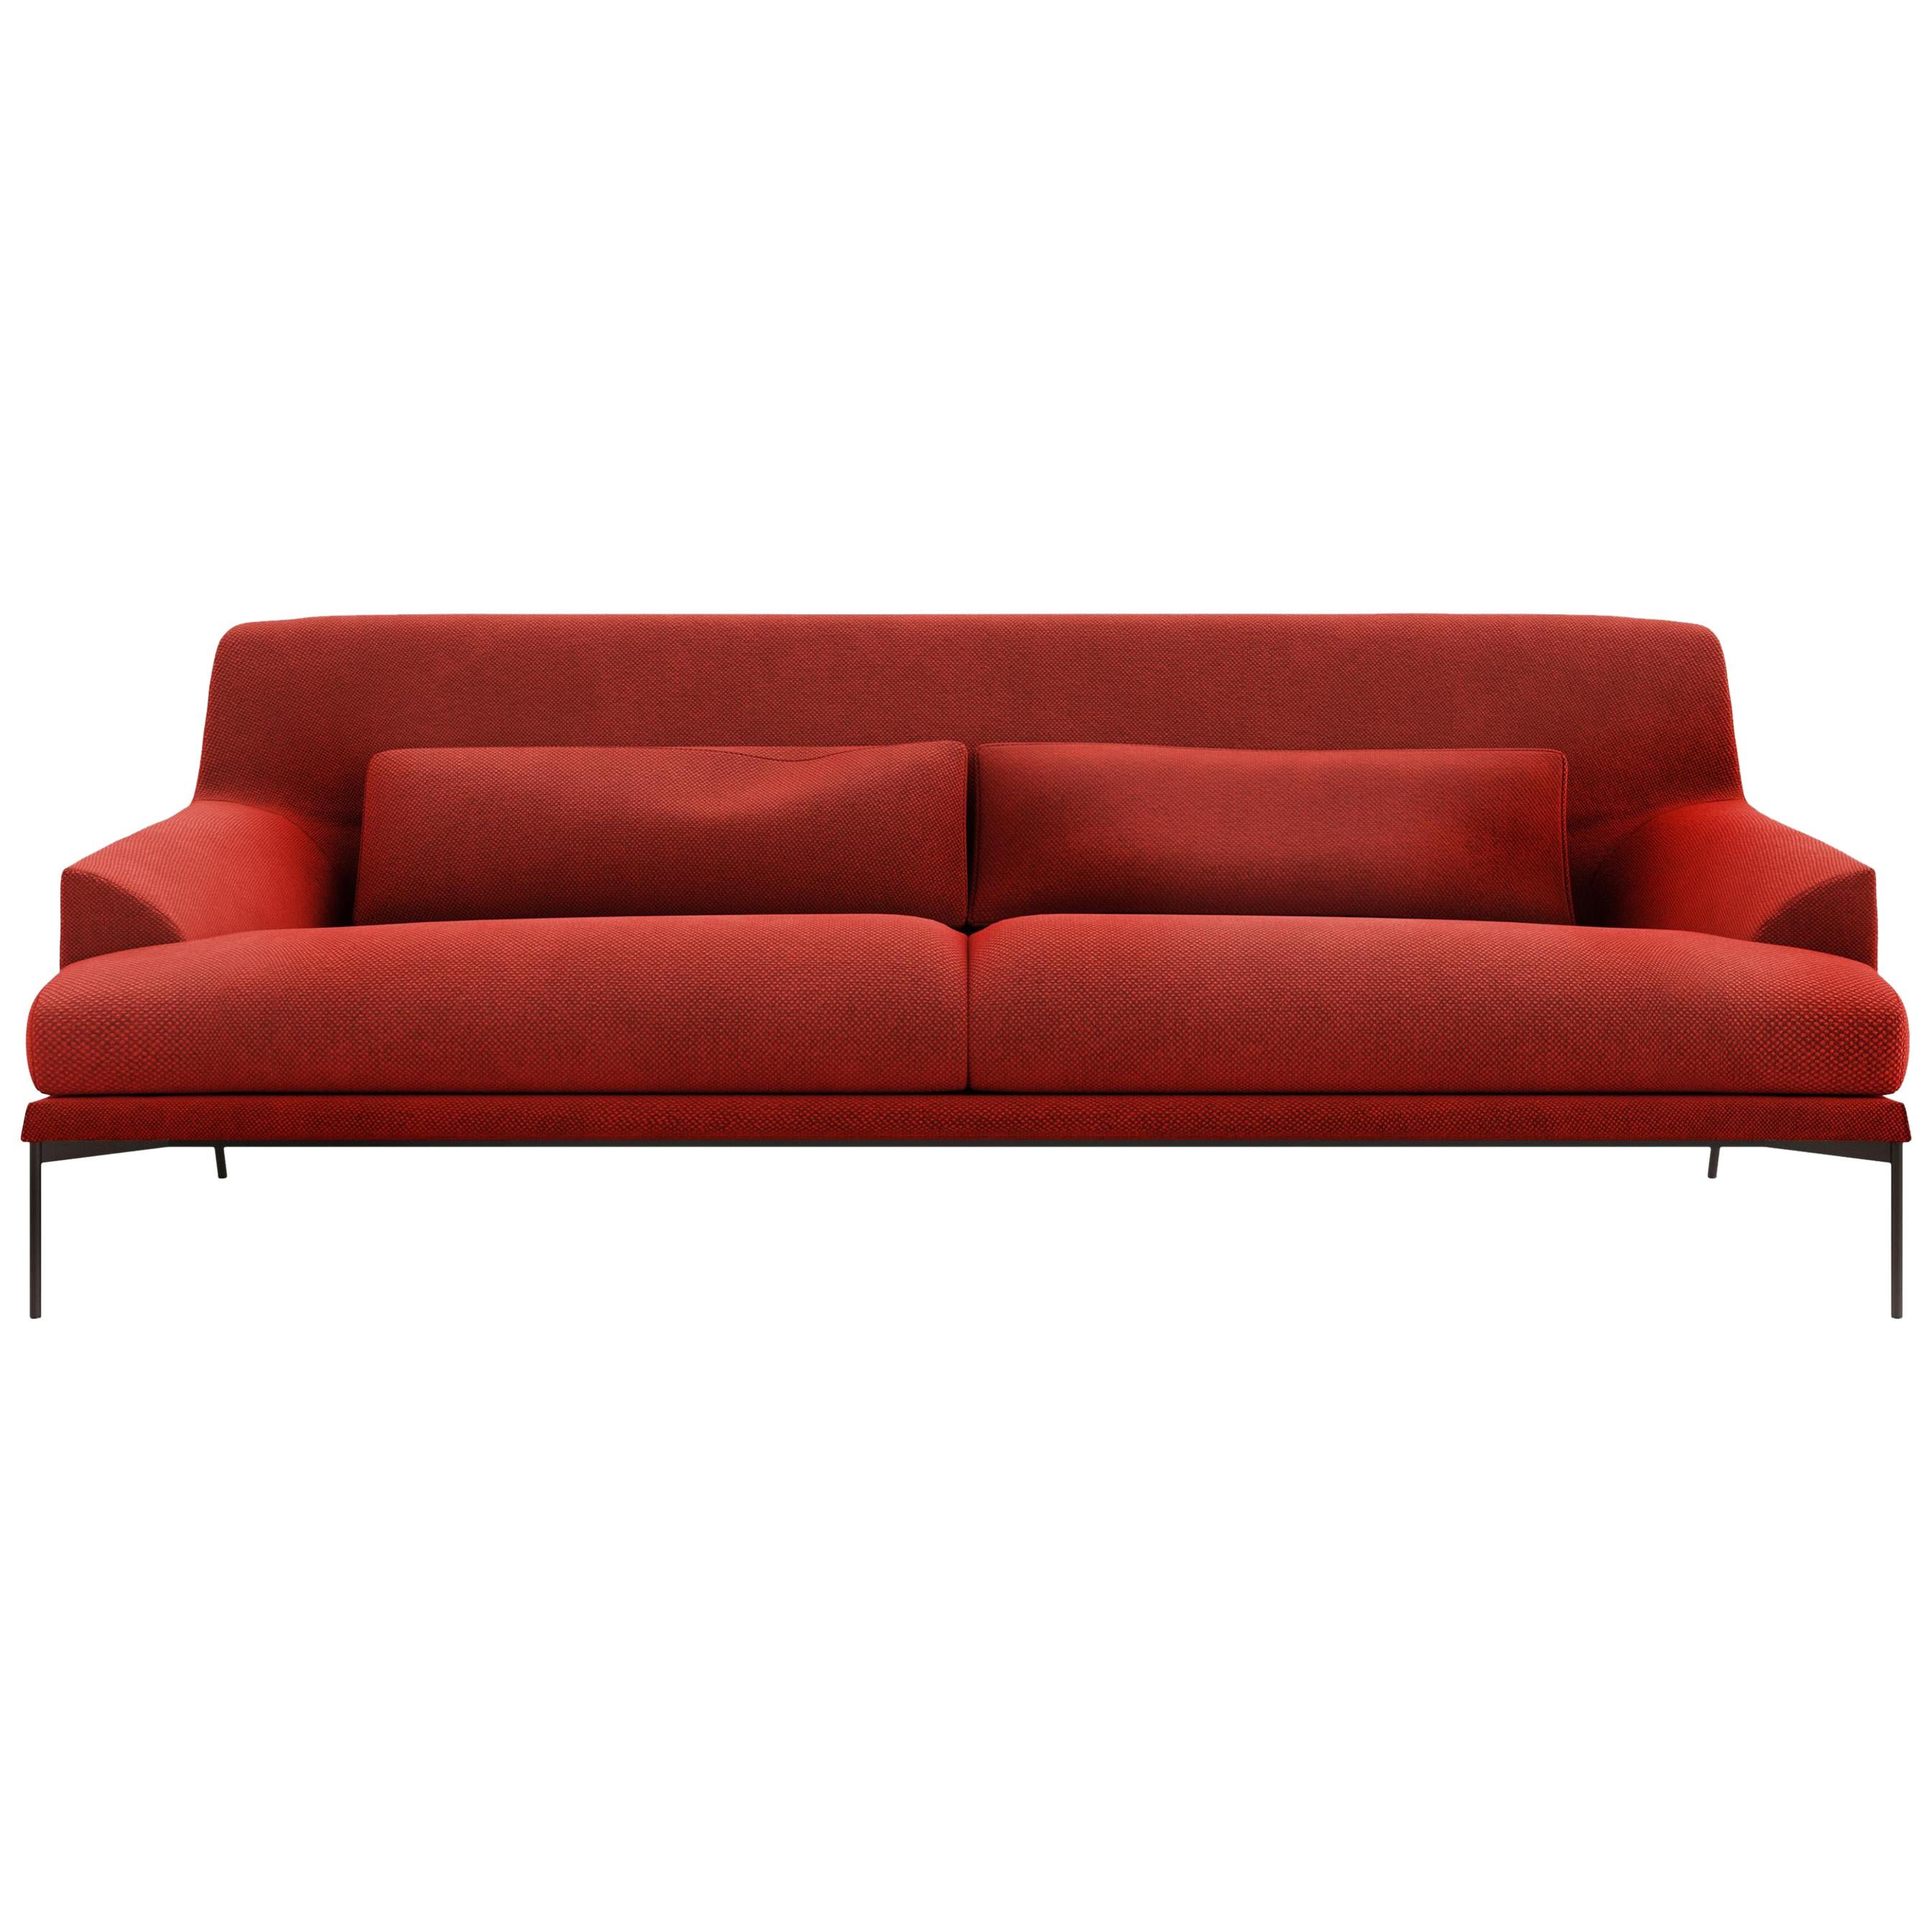 Customizable Montevideo Sofa Designed Claesson Koivisto Rune For Sale